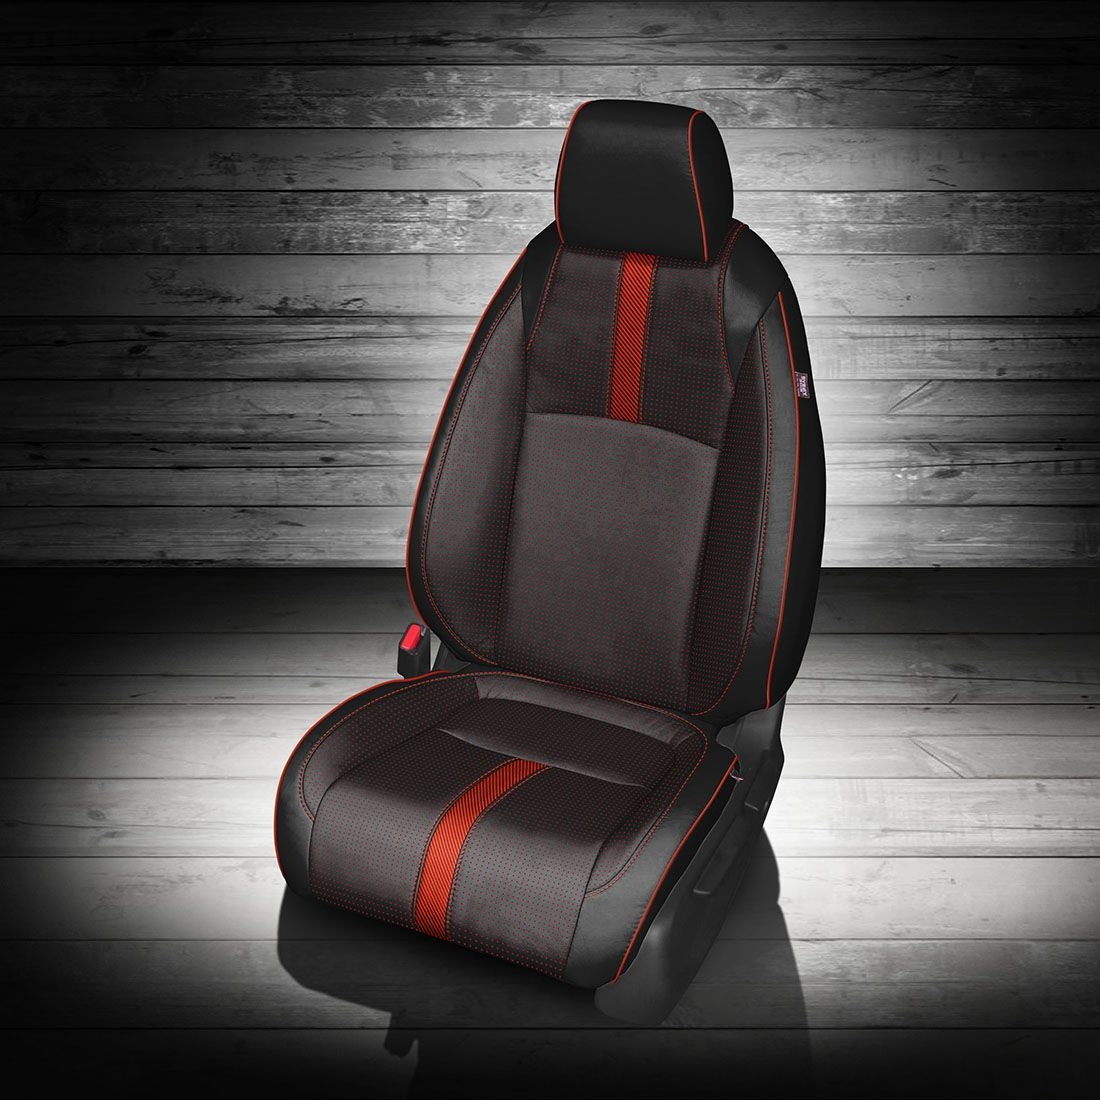 Leather Heated Seats Honda Civic Forum